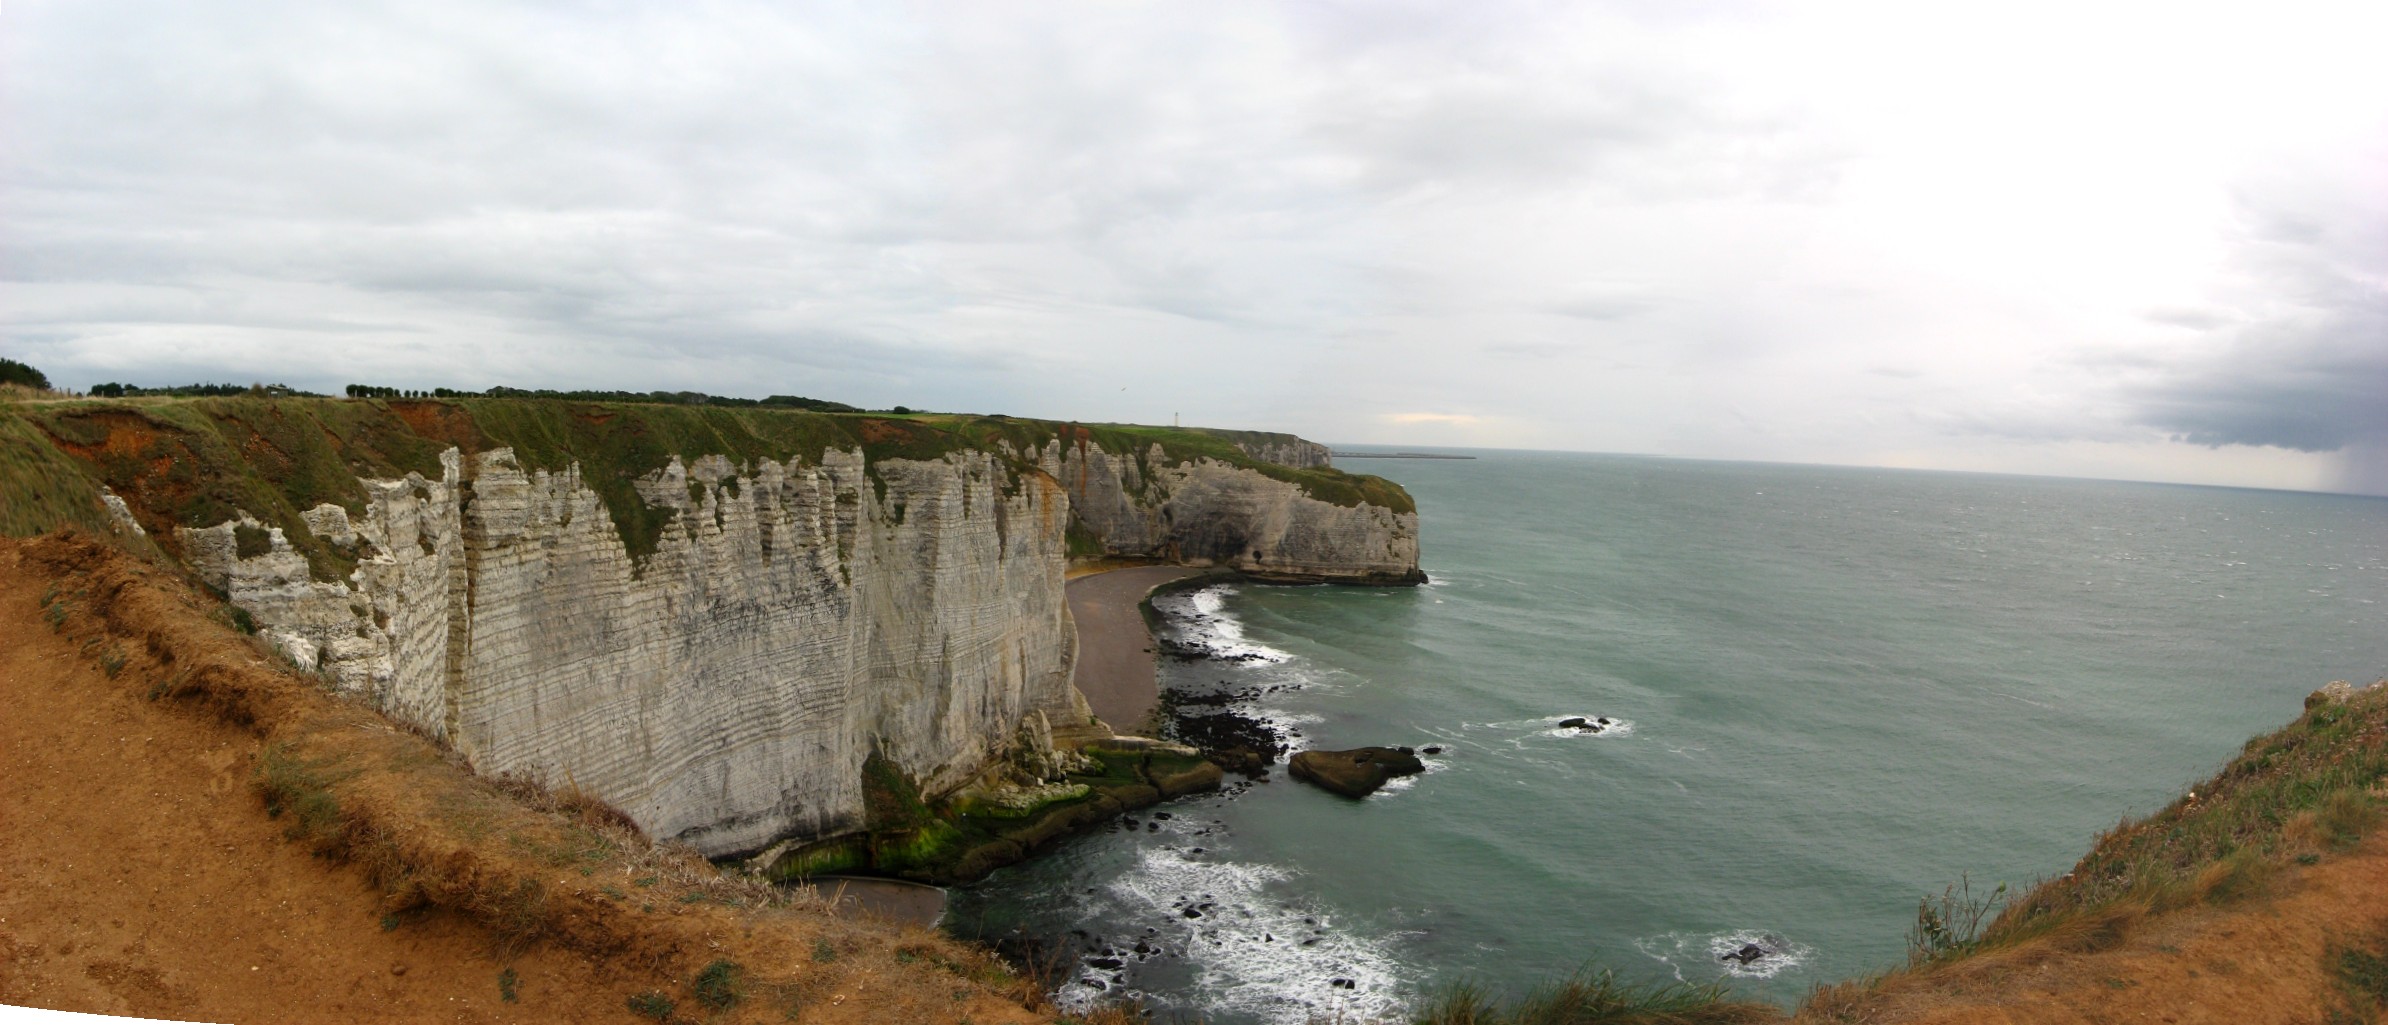 File:Etretat Cliff Panorama.JPG - Wikimedia Commons